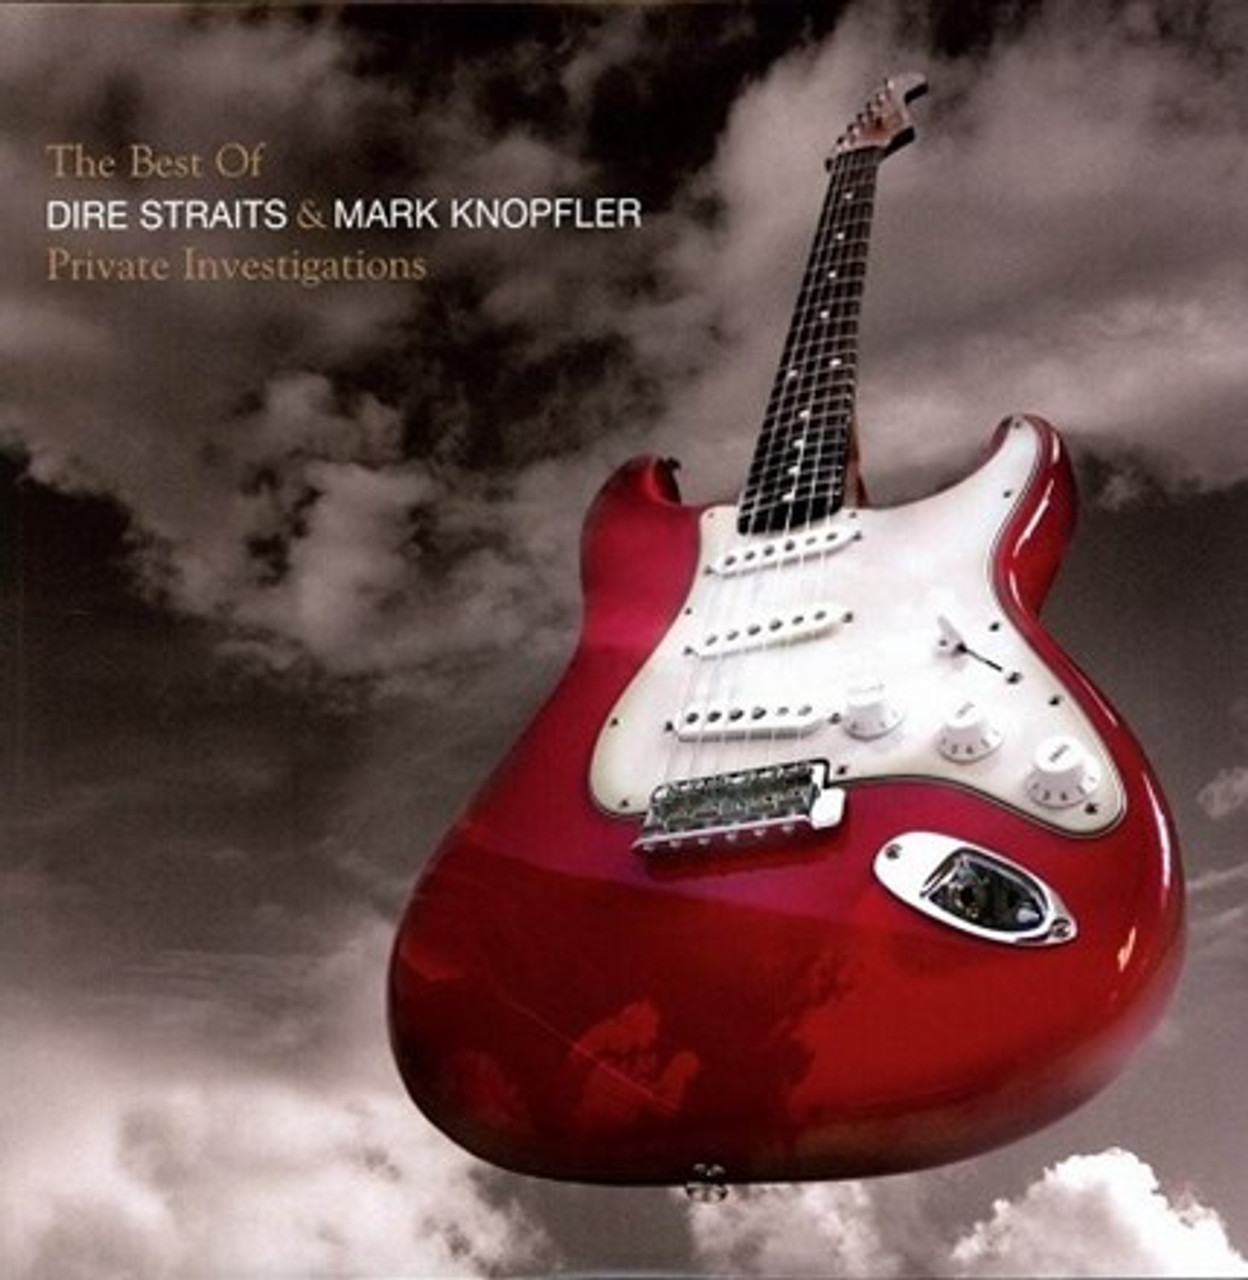 Best of Dire Straits & Mark Knopfler